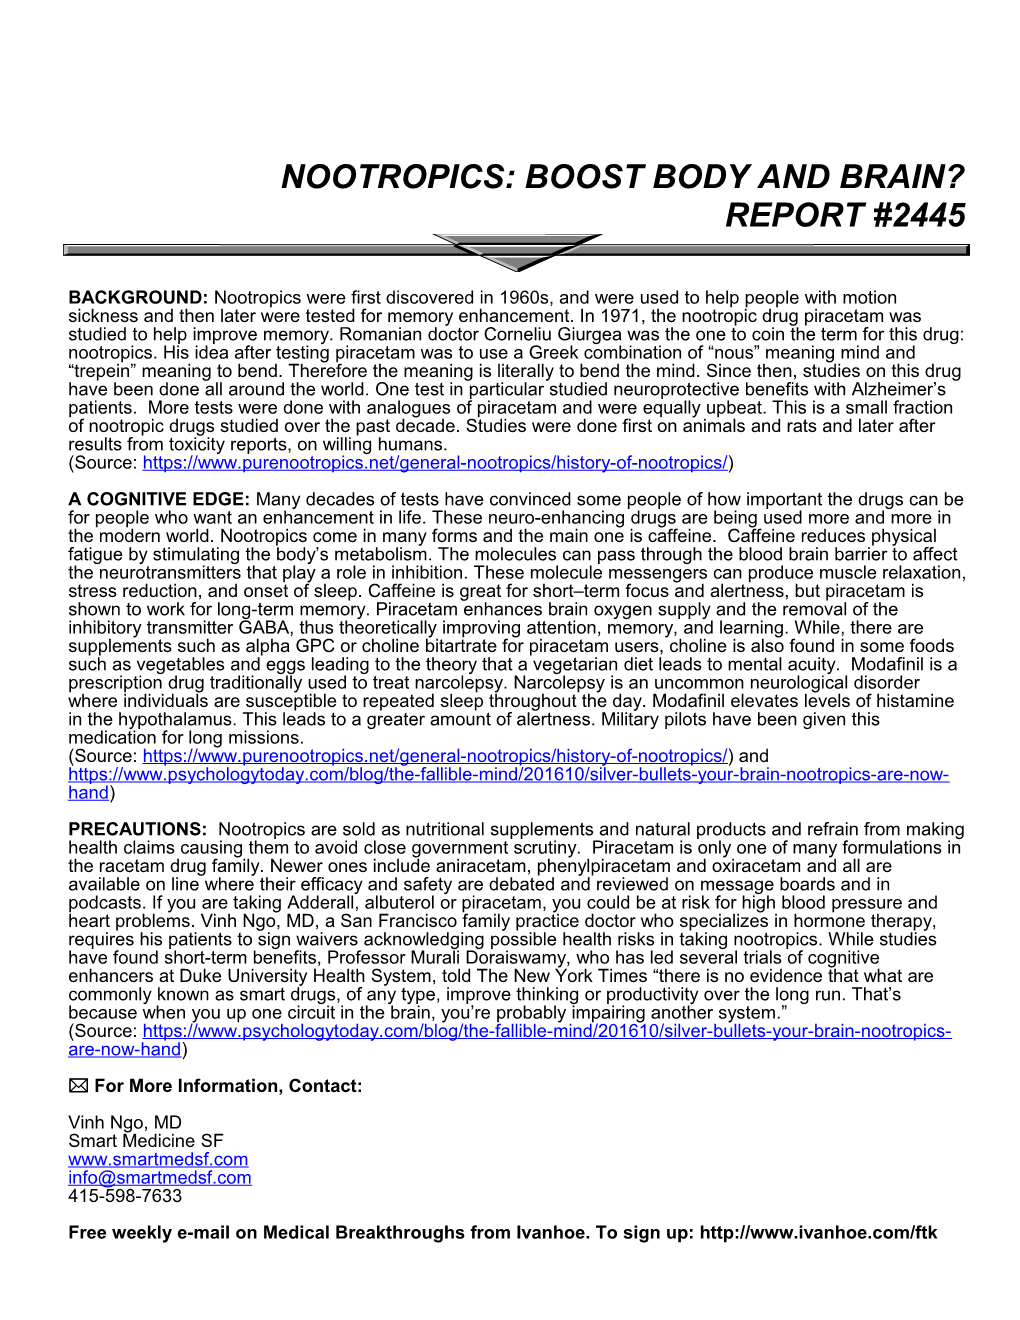 Nootropics: Boost Body and Brain? Report #2445